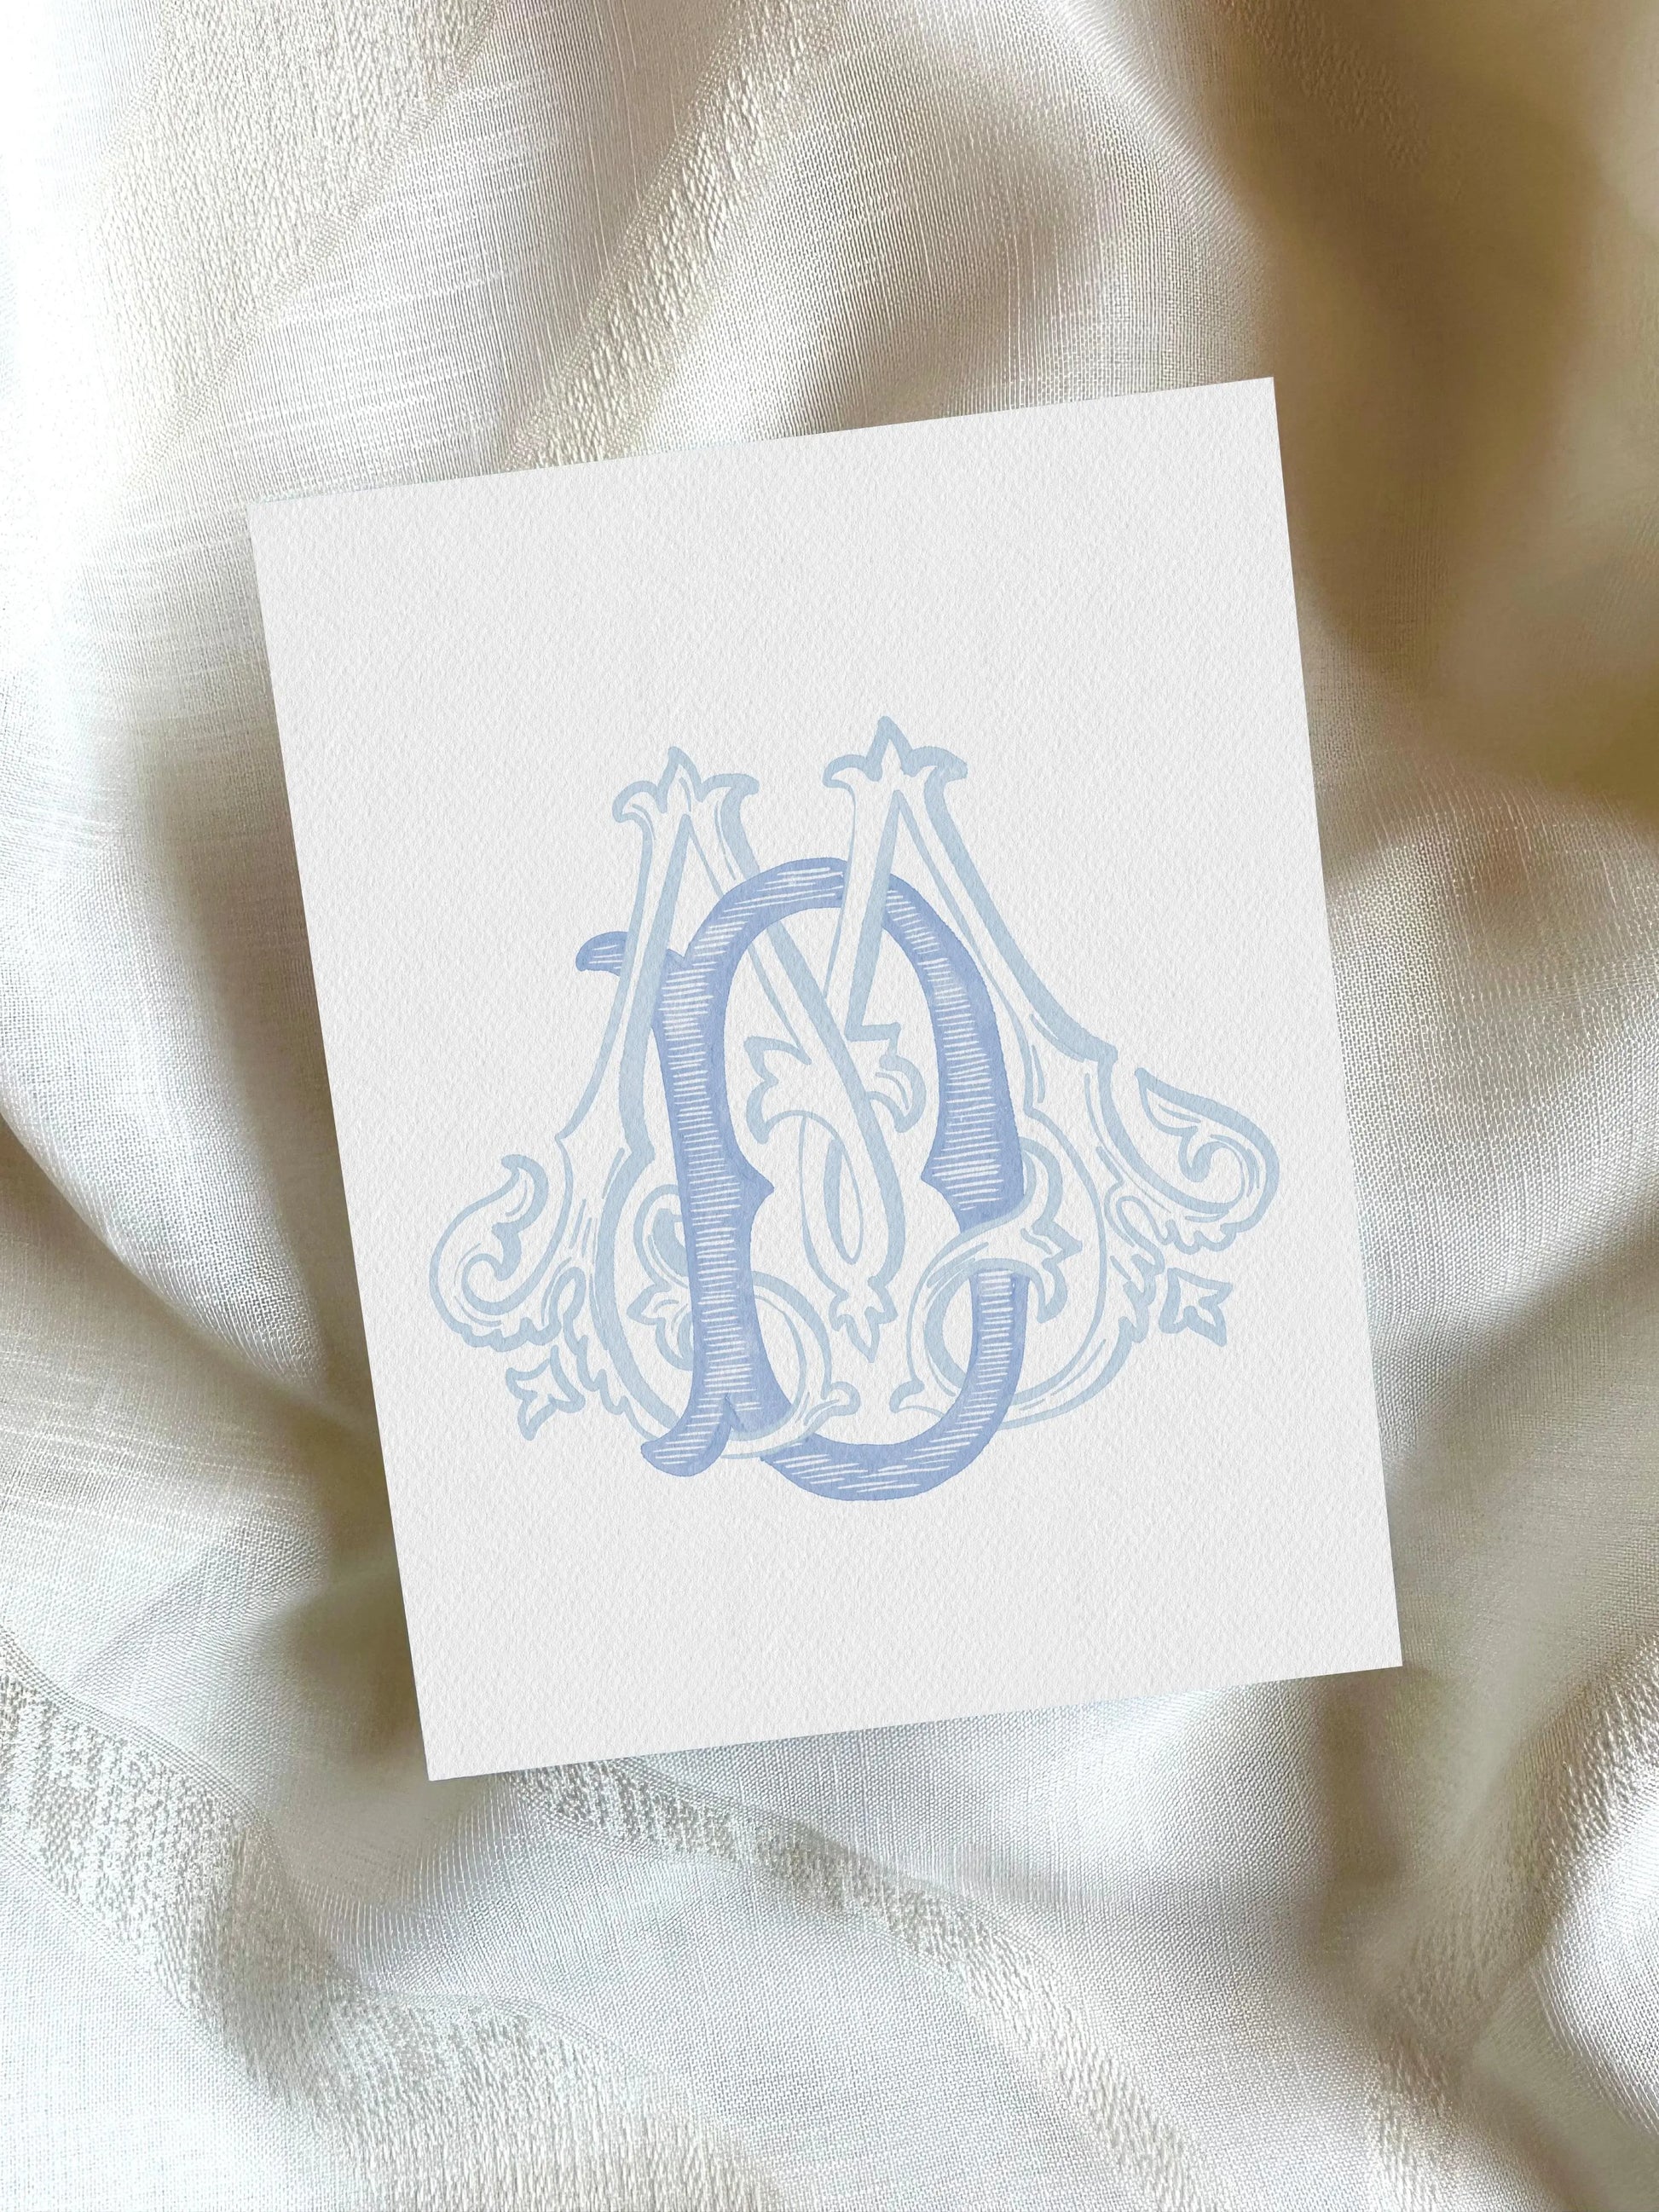 2 Letter Monogram with Letters DM | Digital Download - Wedding Monogram SVG, Personal Logo, Wedding Logo for Wedding Invitations The Wedding Crest Lab